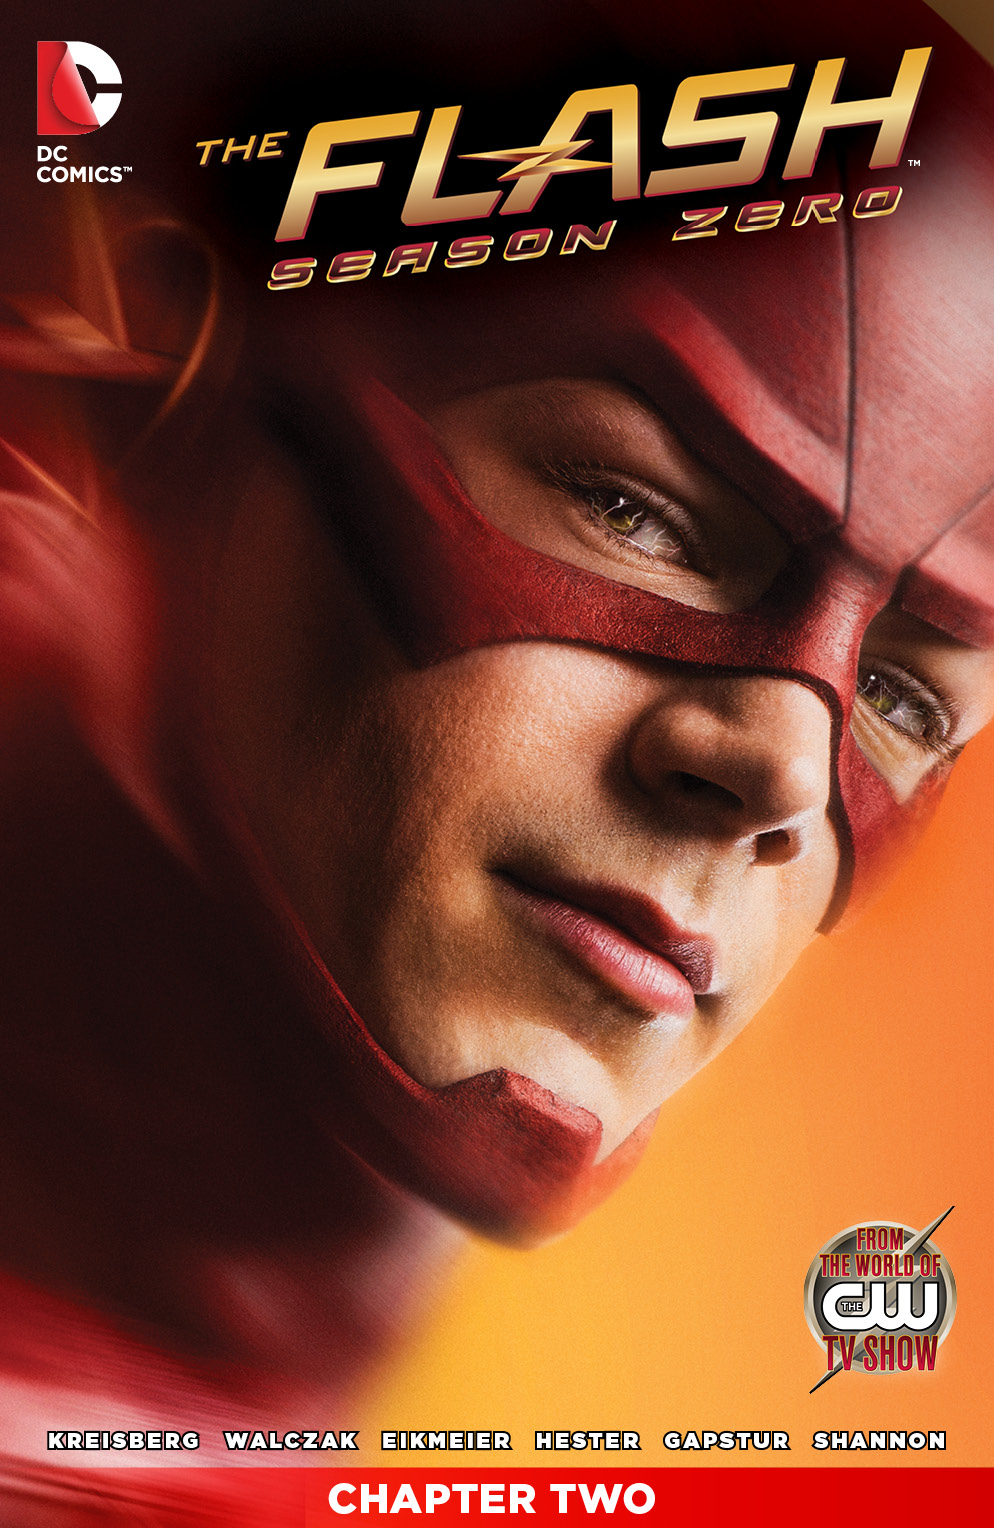 The Flash: Season Zero #2 preview images